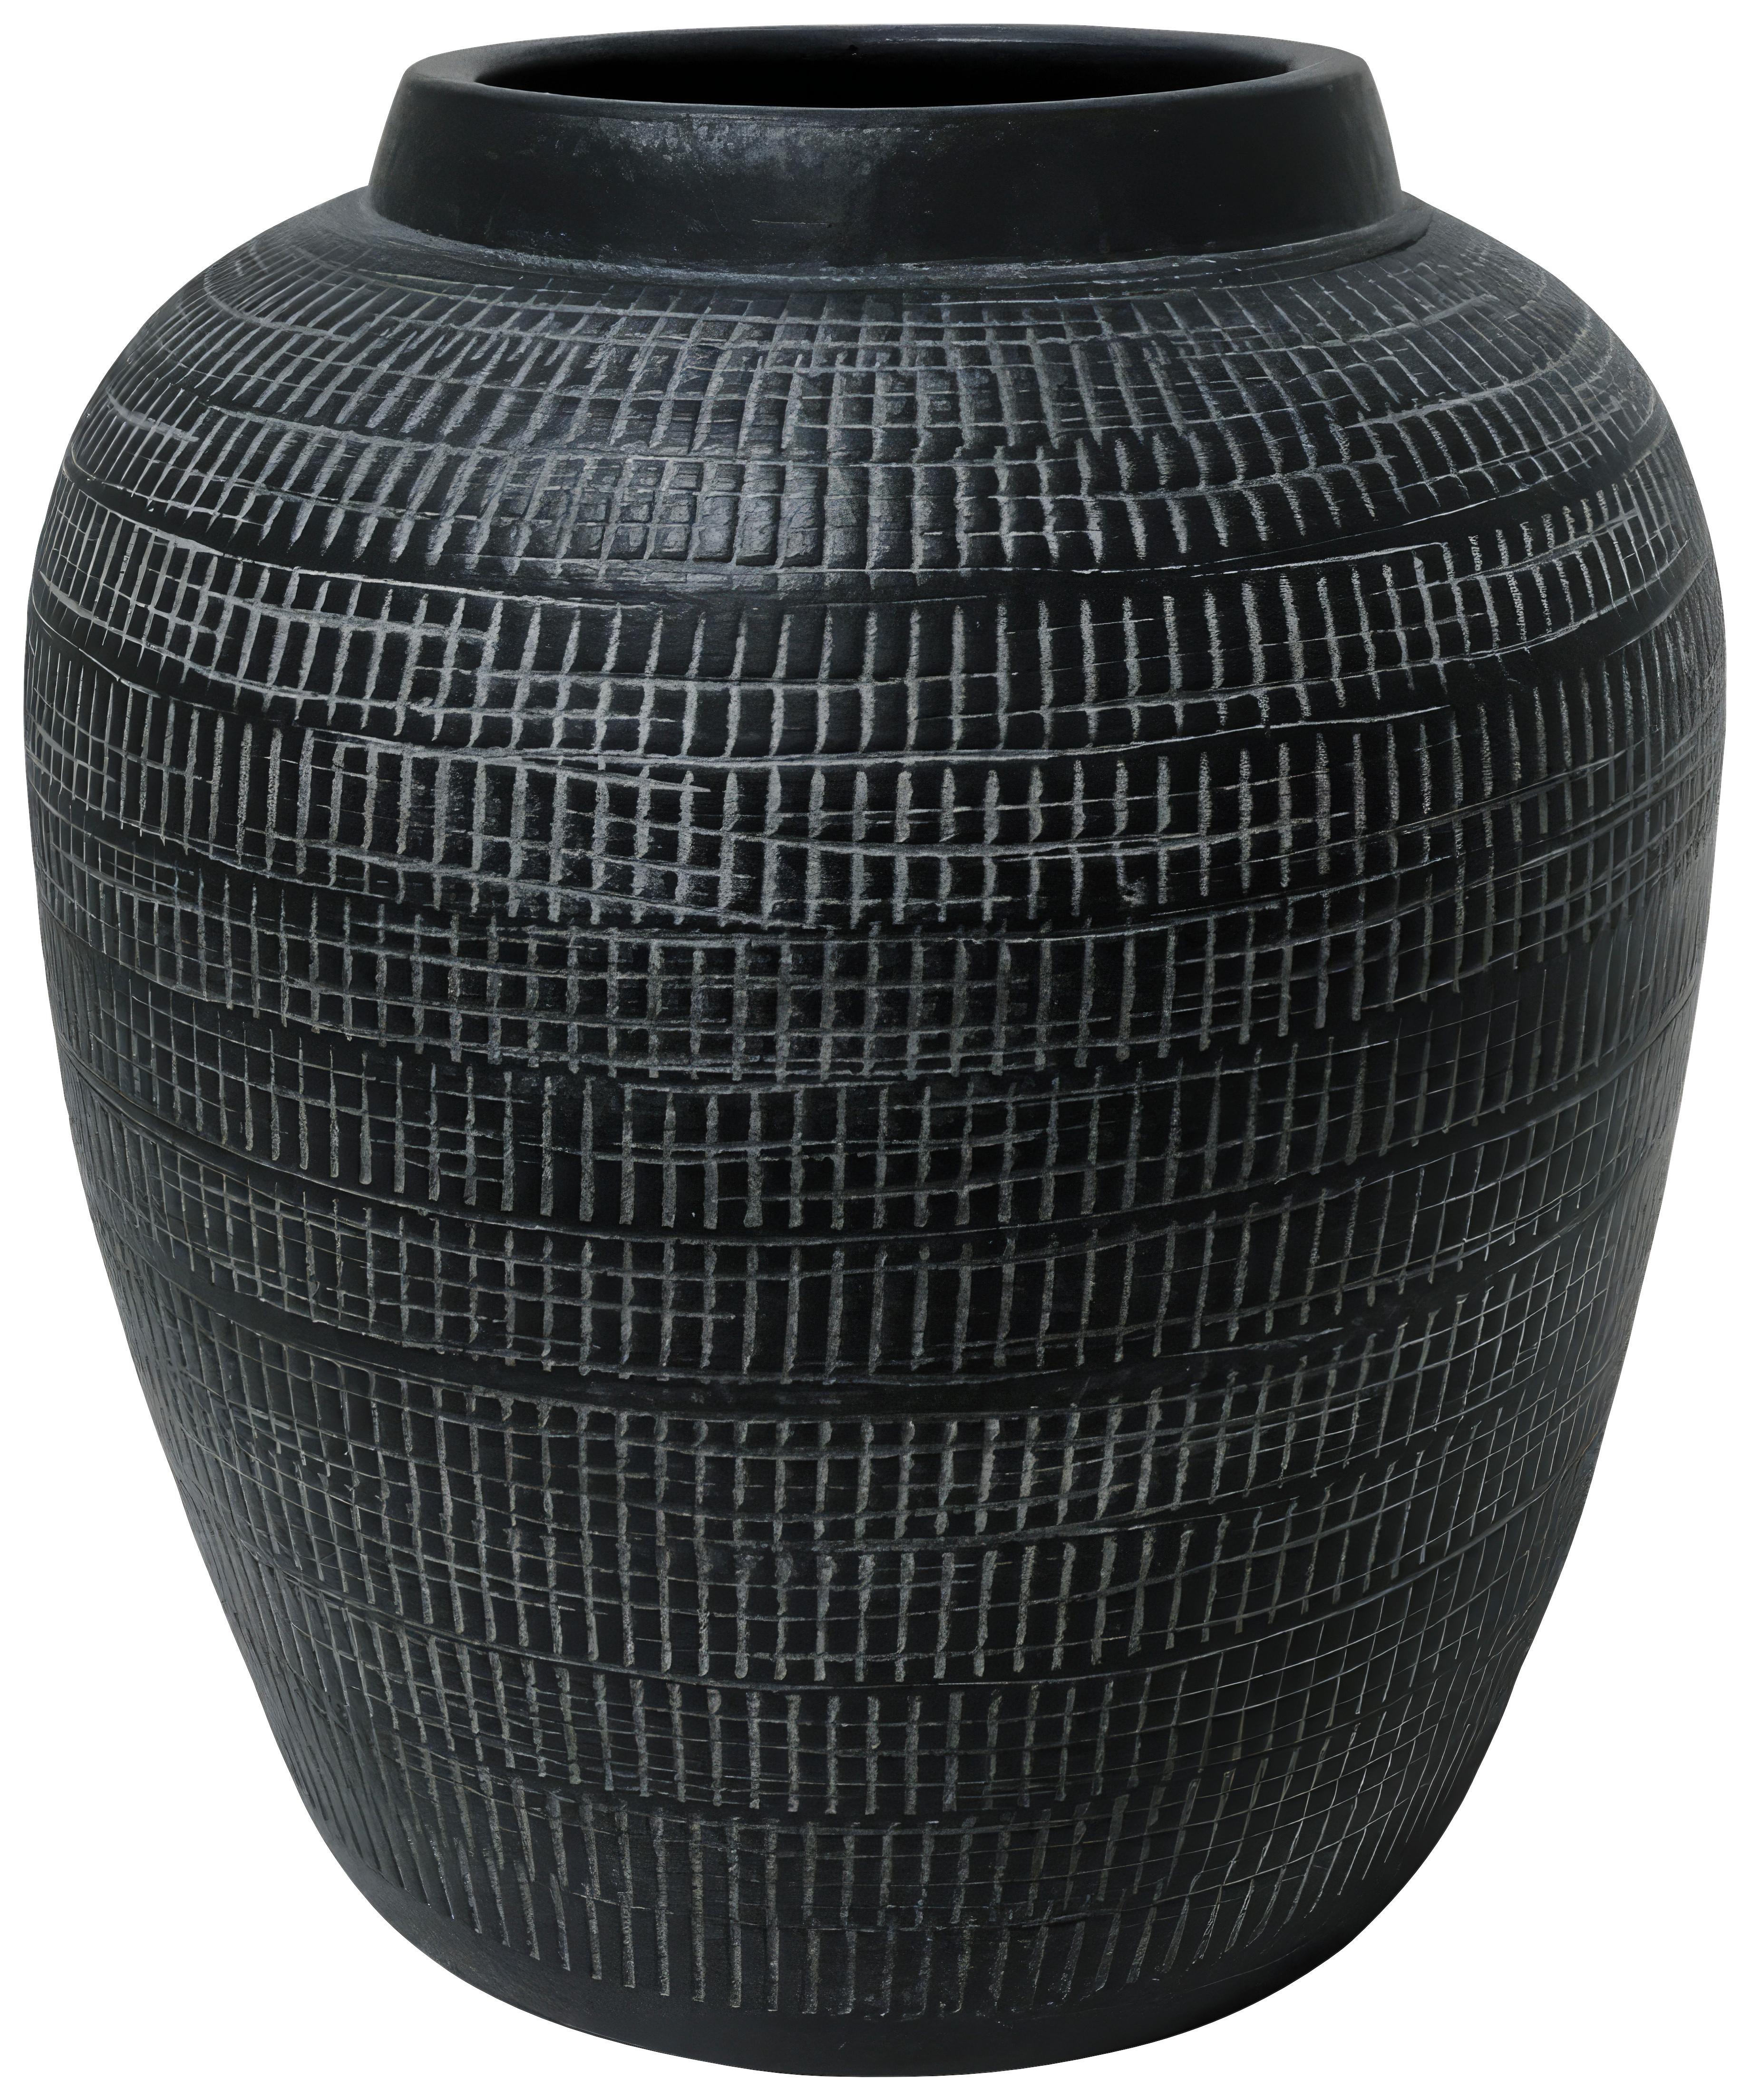 Vaza Manuel - temno siva, Moderno, keramika (27/30cm) - Premium Living